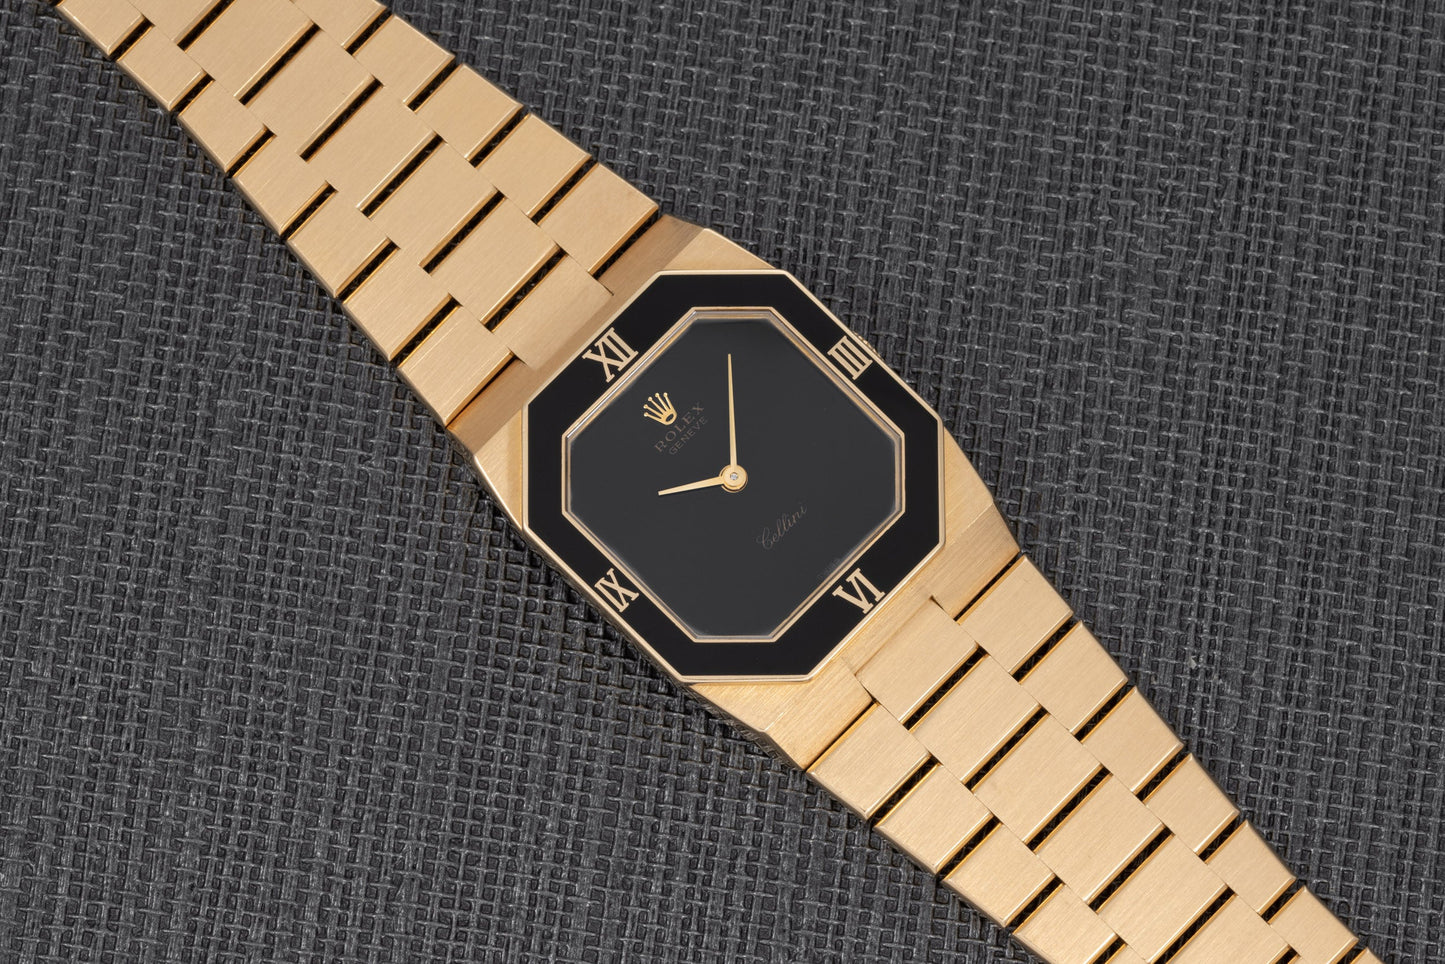 Celini Design - Luxury Watch Straps & Accessories